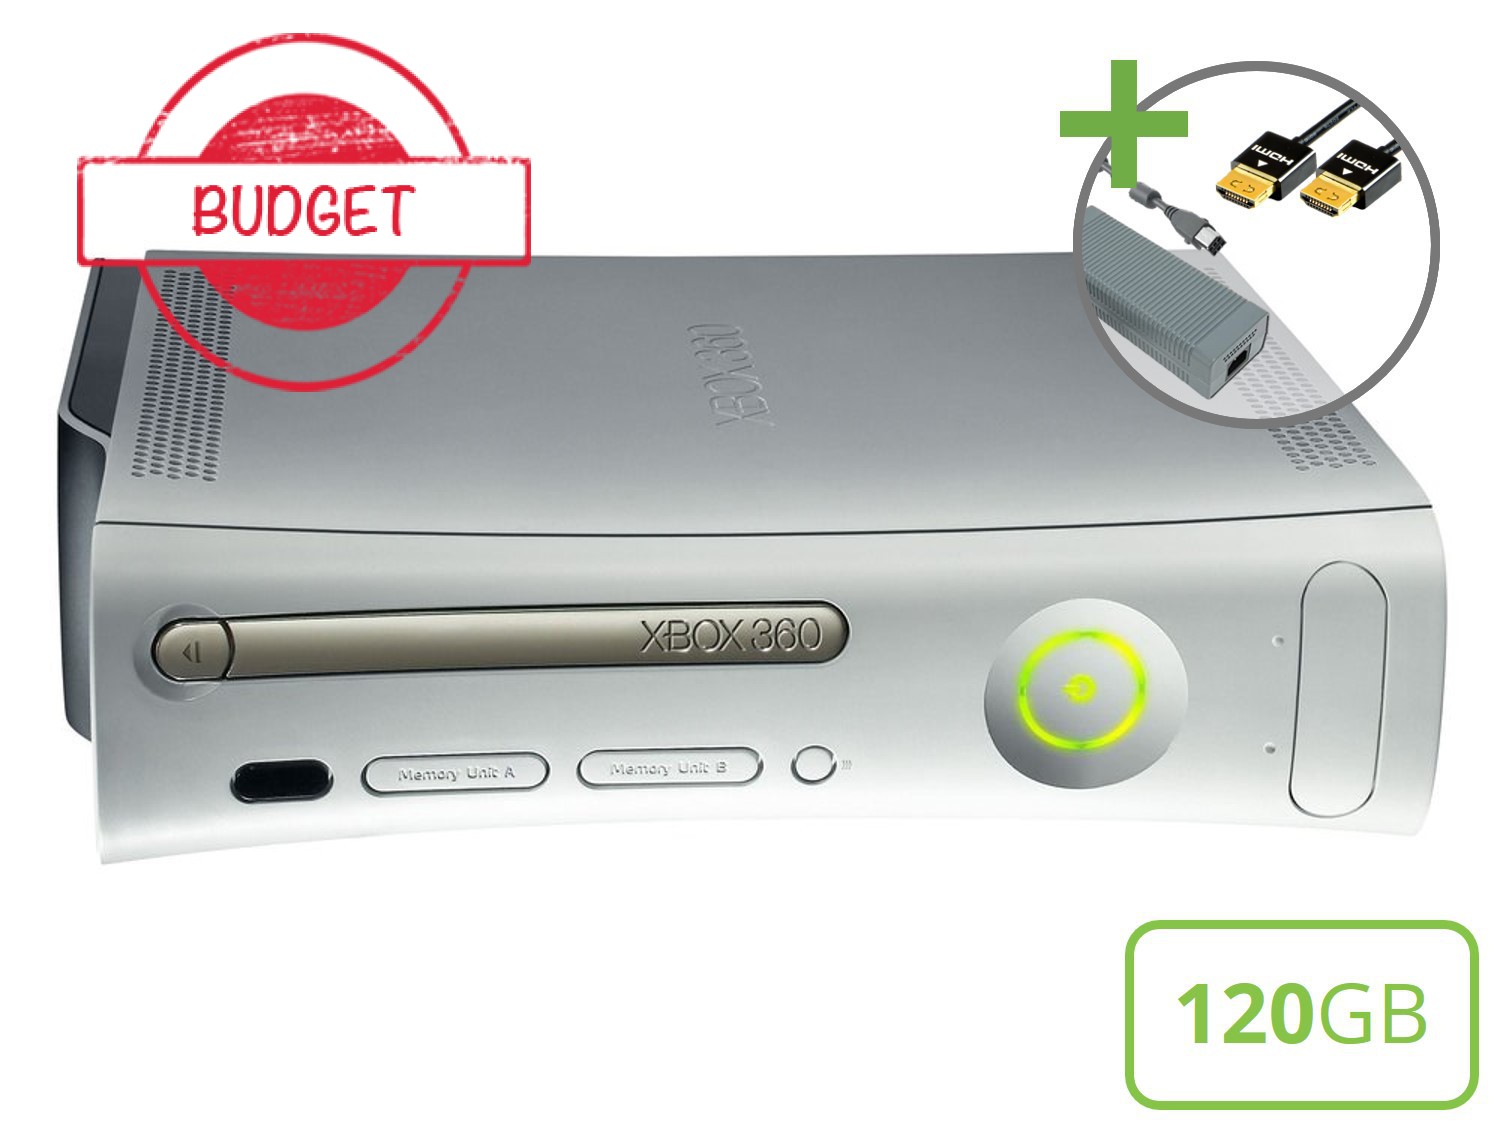 Microsoft Xbox 360 Premium Starter Pack - 120GB Premium Gold Edition - Budget - Xbox 360 Hardware - 2